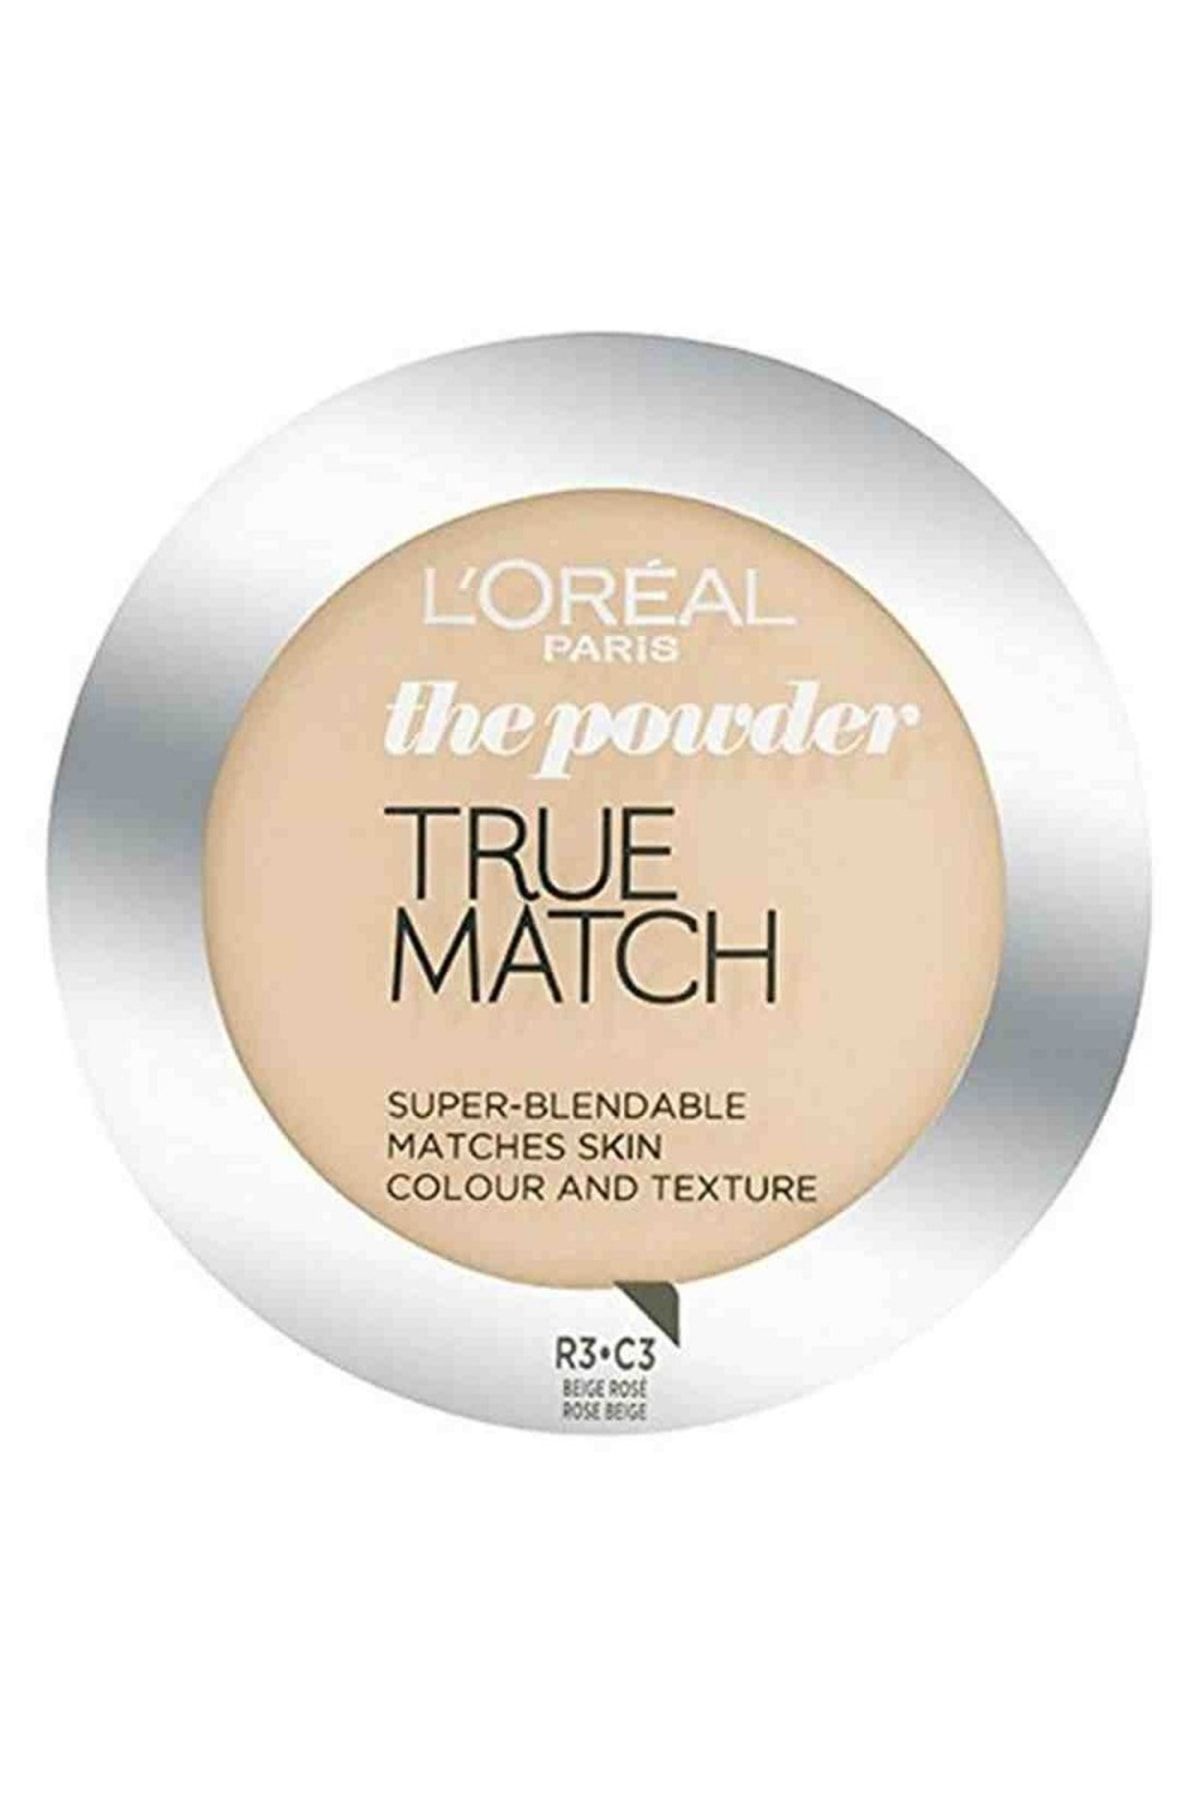 L'Oreal Paris Pudra - True Match Powder 3.r/3.c Rose Beige